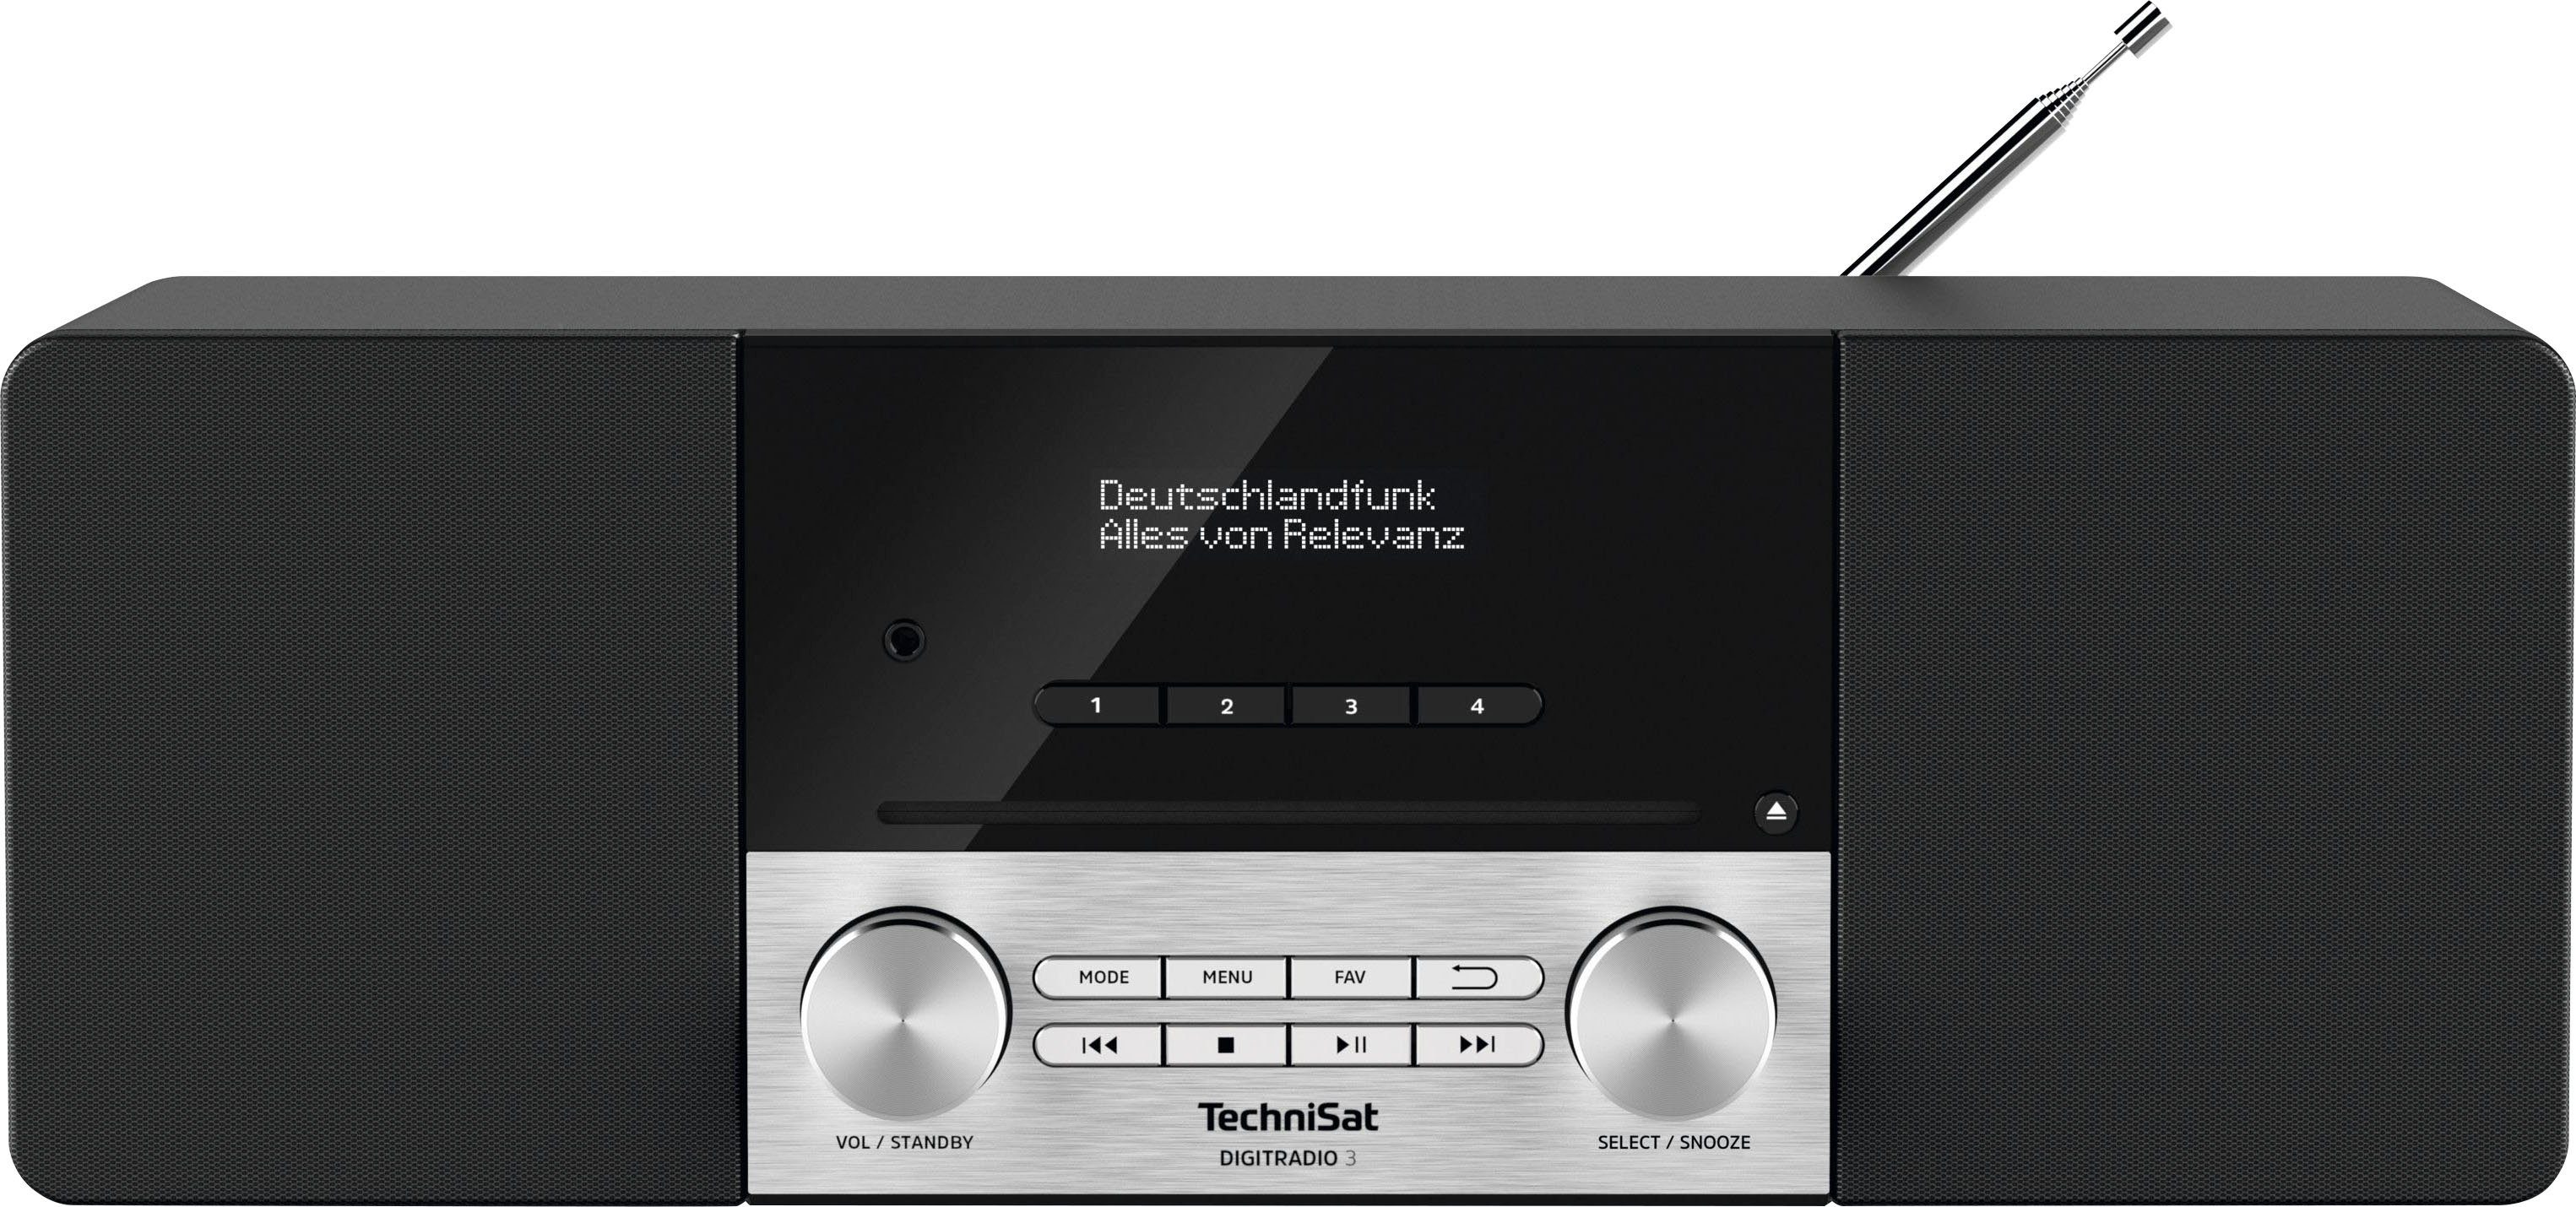 UKW (DAB) (DAB), Made 20 Germany) in CD-Player, TechniSat (Digitalradio W, RDS, 3 Digitalradio schwarz mit DIGITRADIO